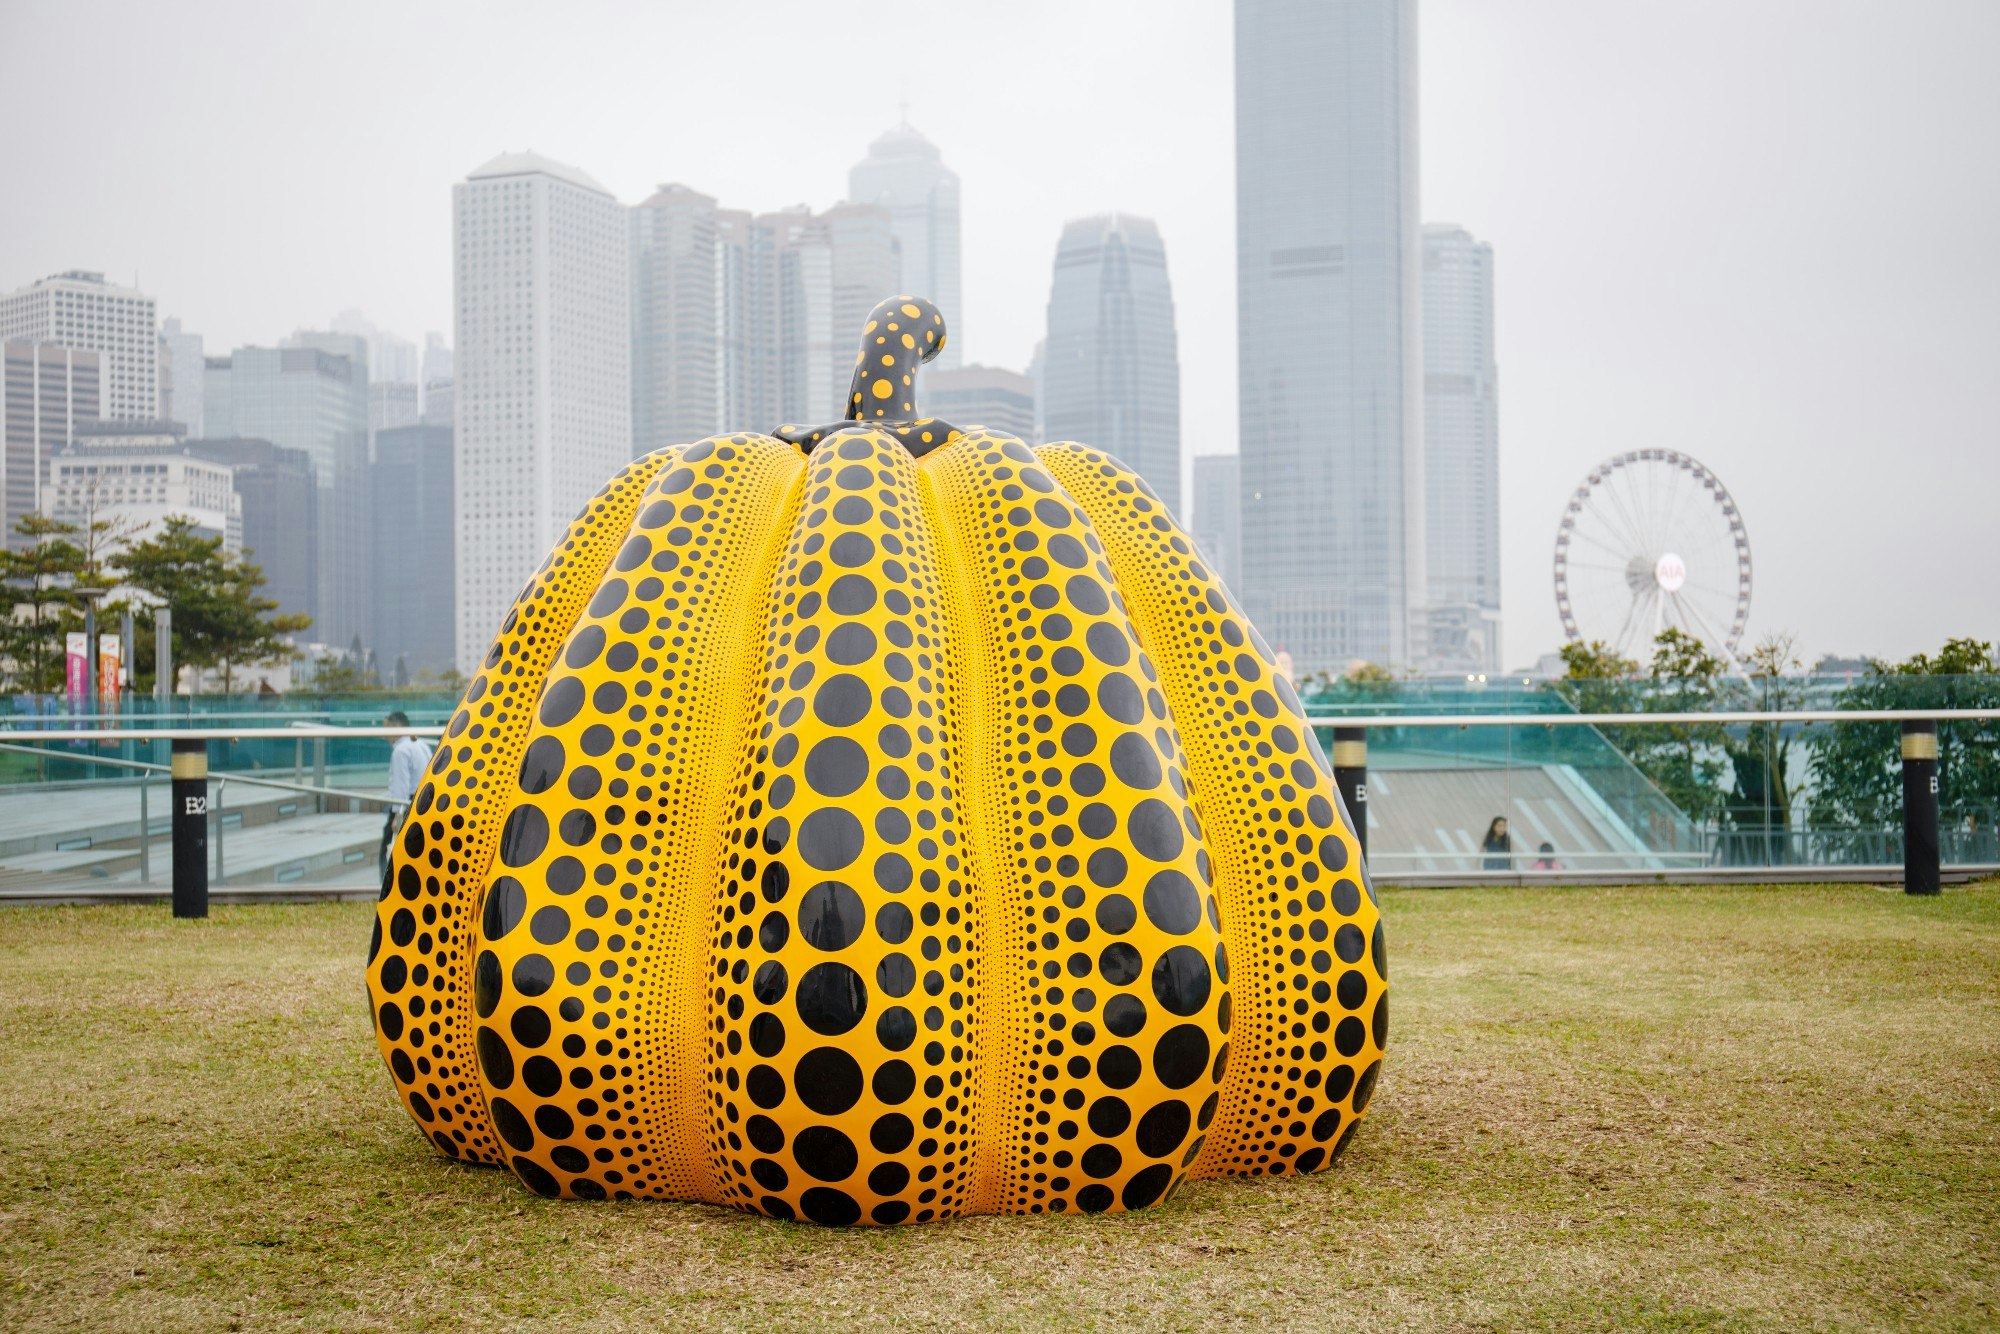 Travel News - Harbour Arts Sculpture Park 2018, Installation view of Pumpkin big, 2008, YAYOI KUSAMA - Edited